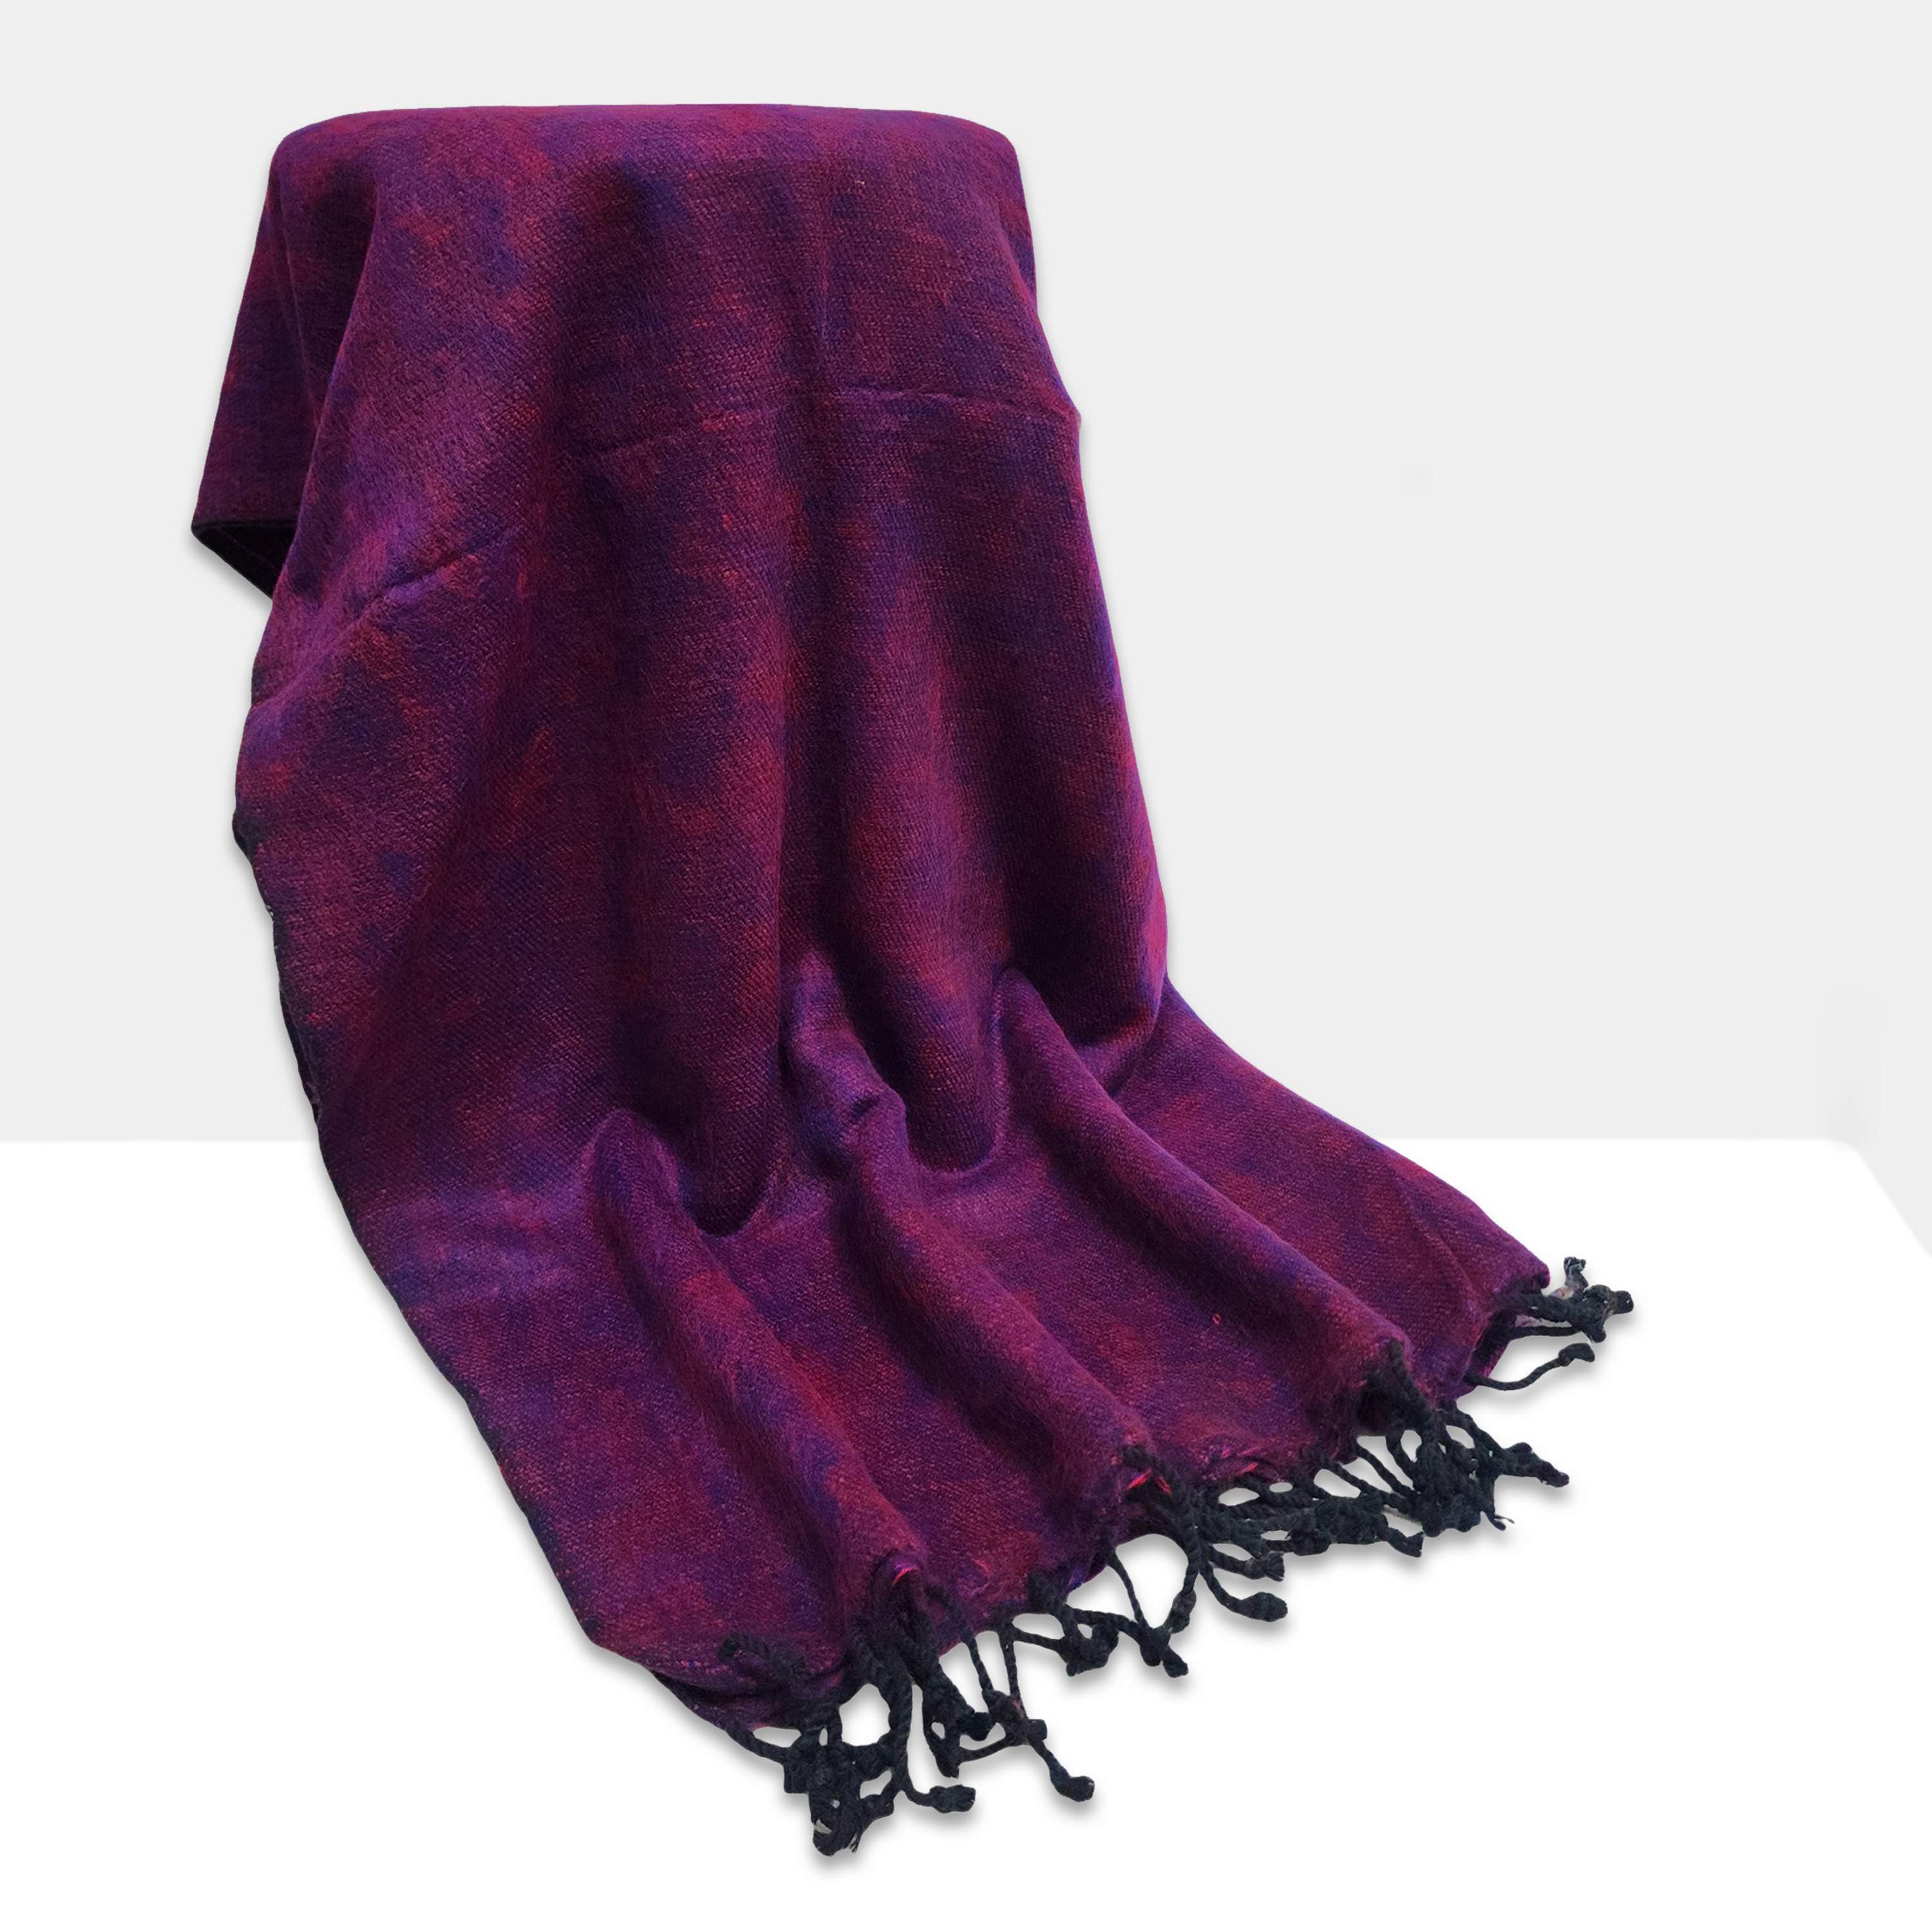 Yak Wool Blanket, Nepali Acrylic Hand Loom Blanket, Color burgundy